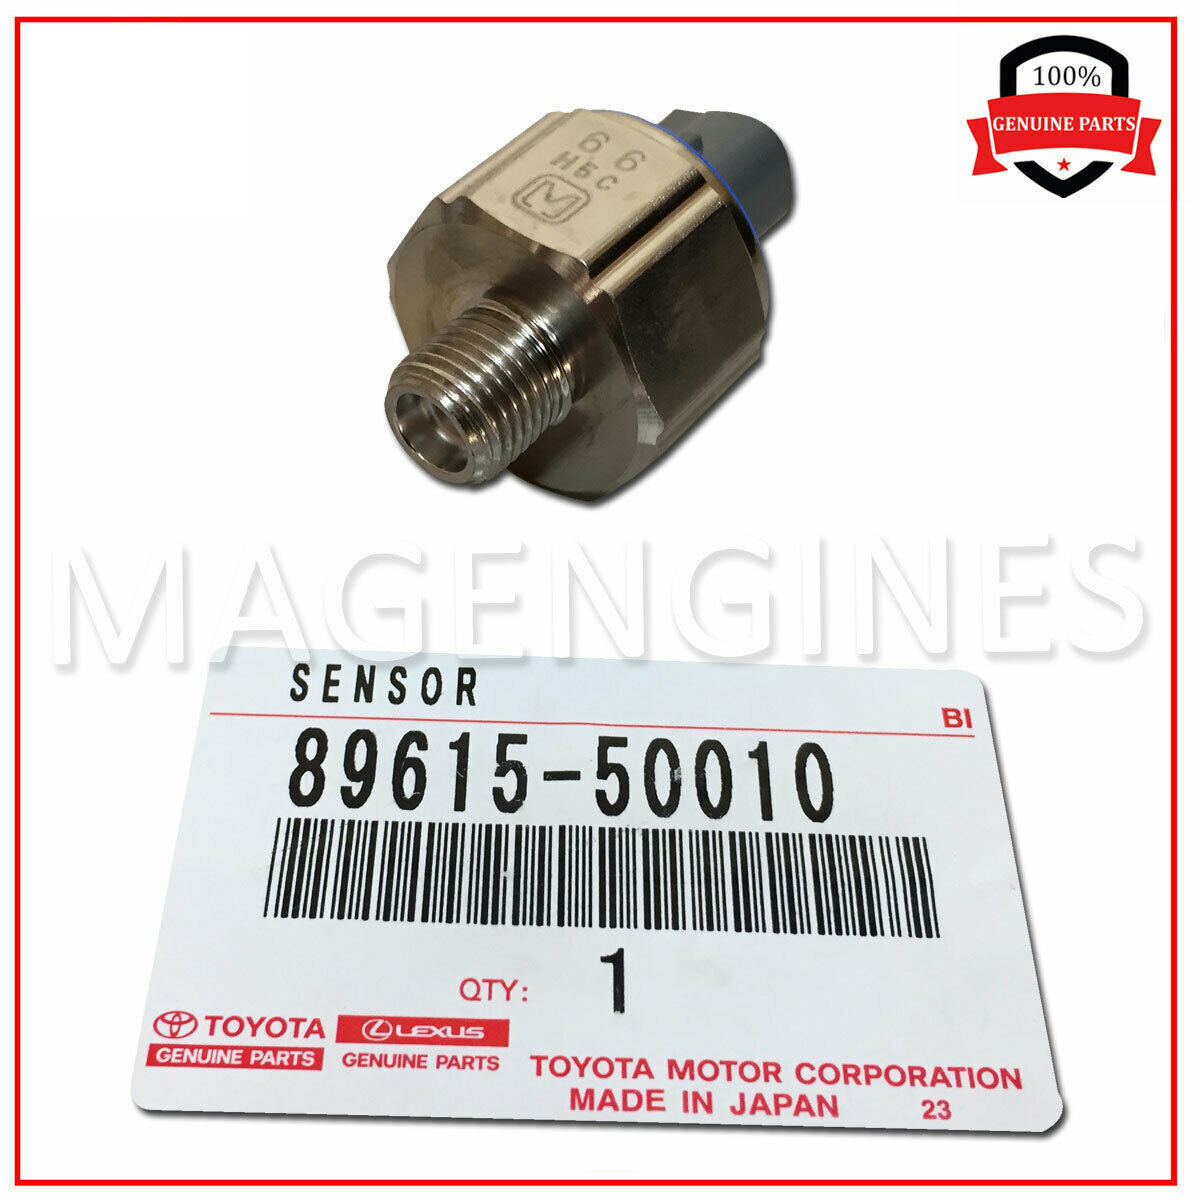 Genuine OEM DENSO 89615-50010 Knock Sensor for Toyota Lexus 89615-50010 